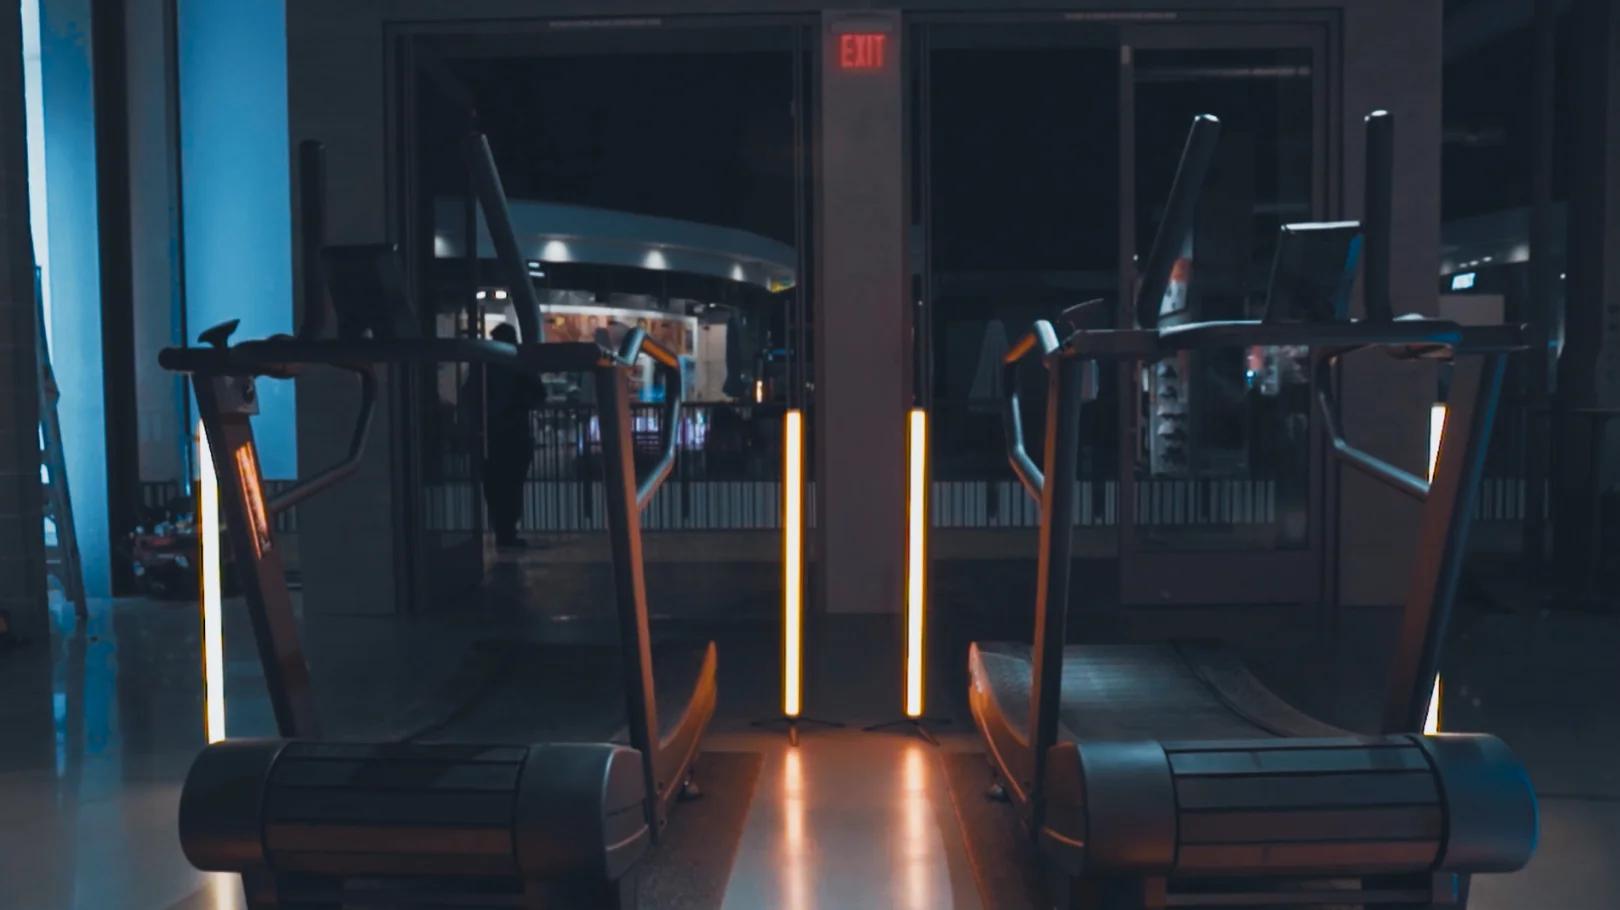 dramatically lit treadmills with large orange tube lights reflecting off the dark floor